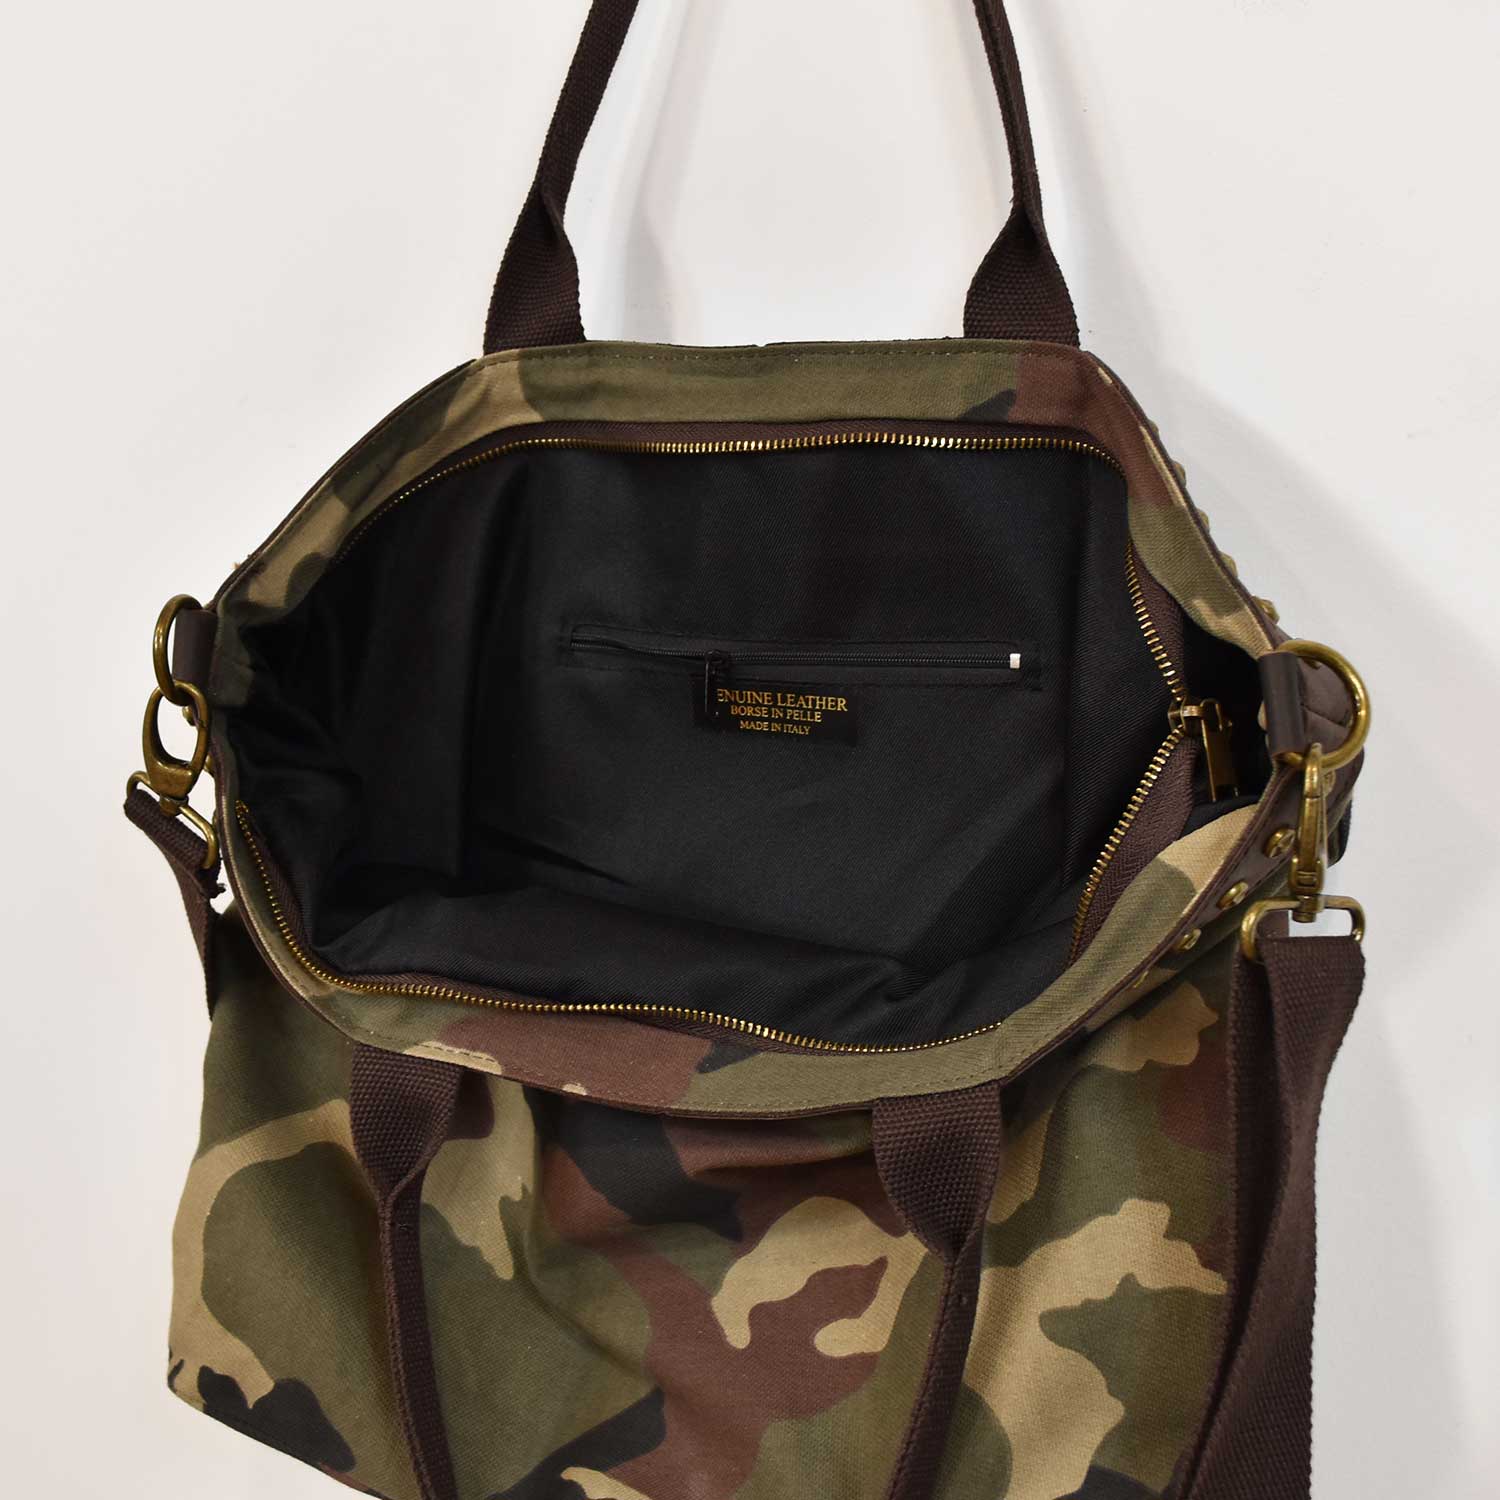 camouflage Studs bag